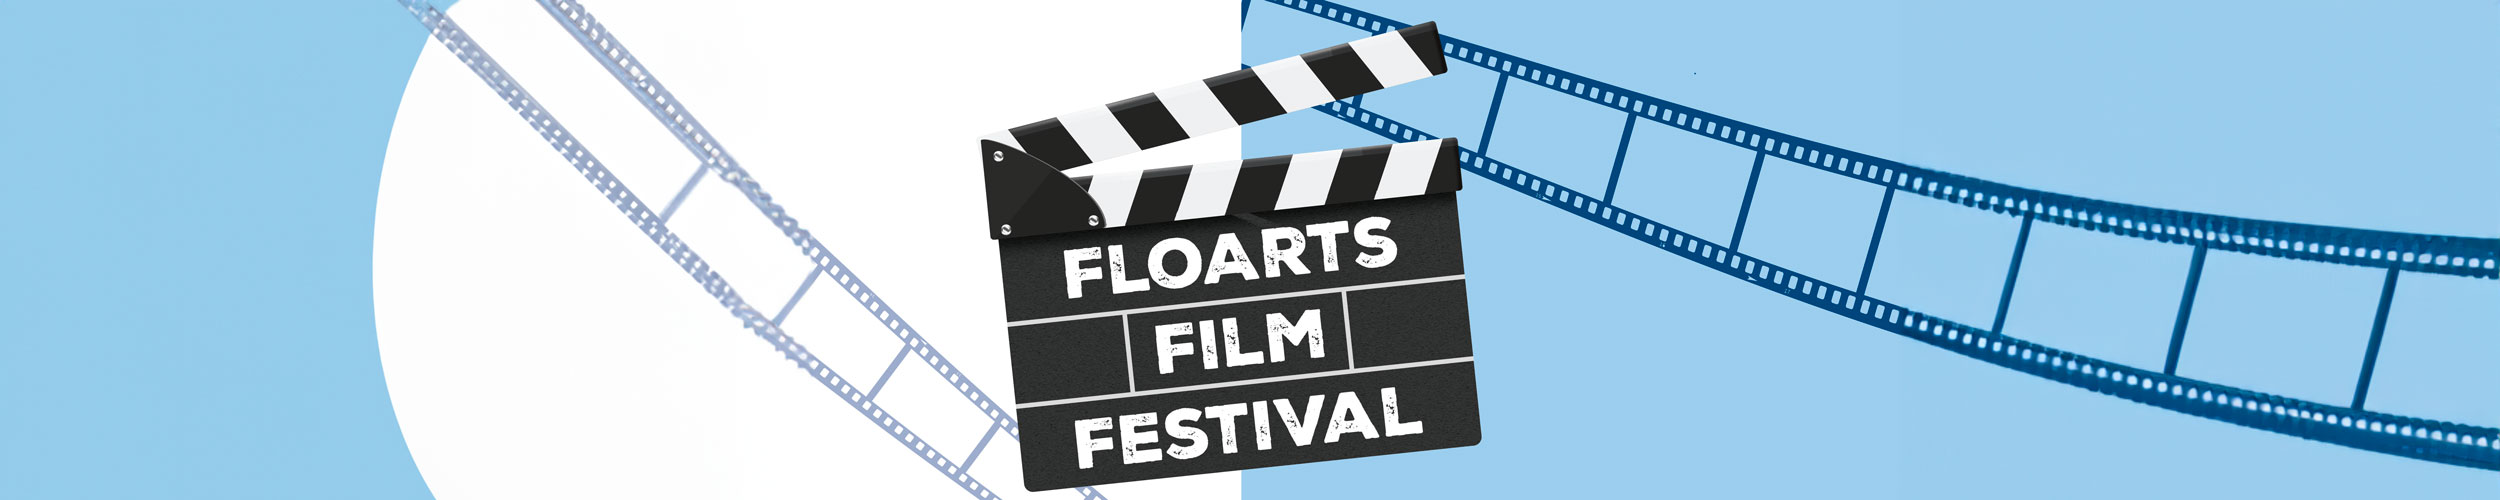 FloArts Film Festival